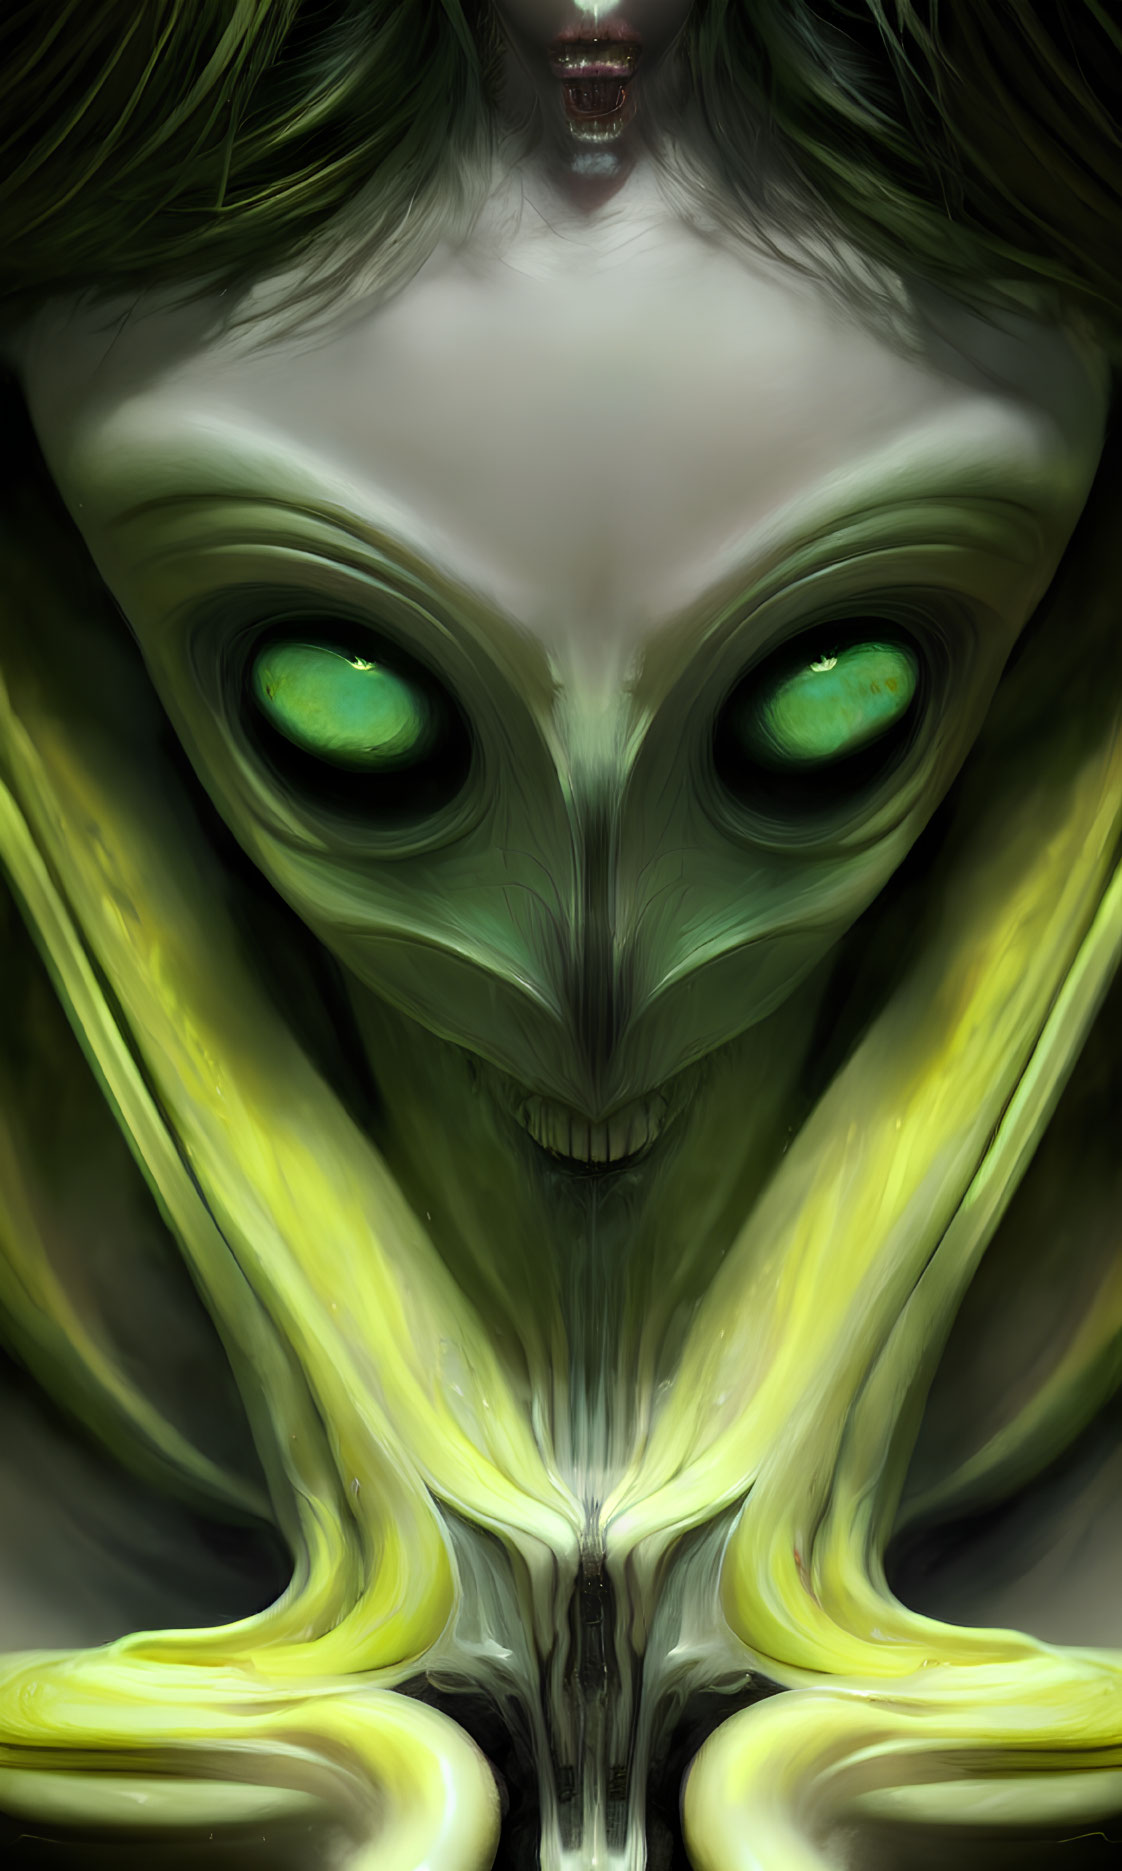 Dark digital artwork: humanoid with green glowing eyes and alien-like features